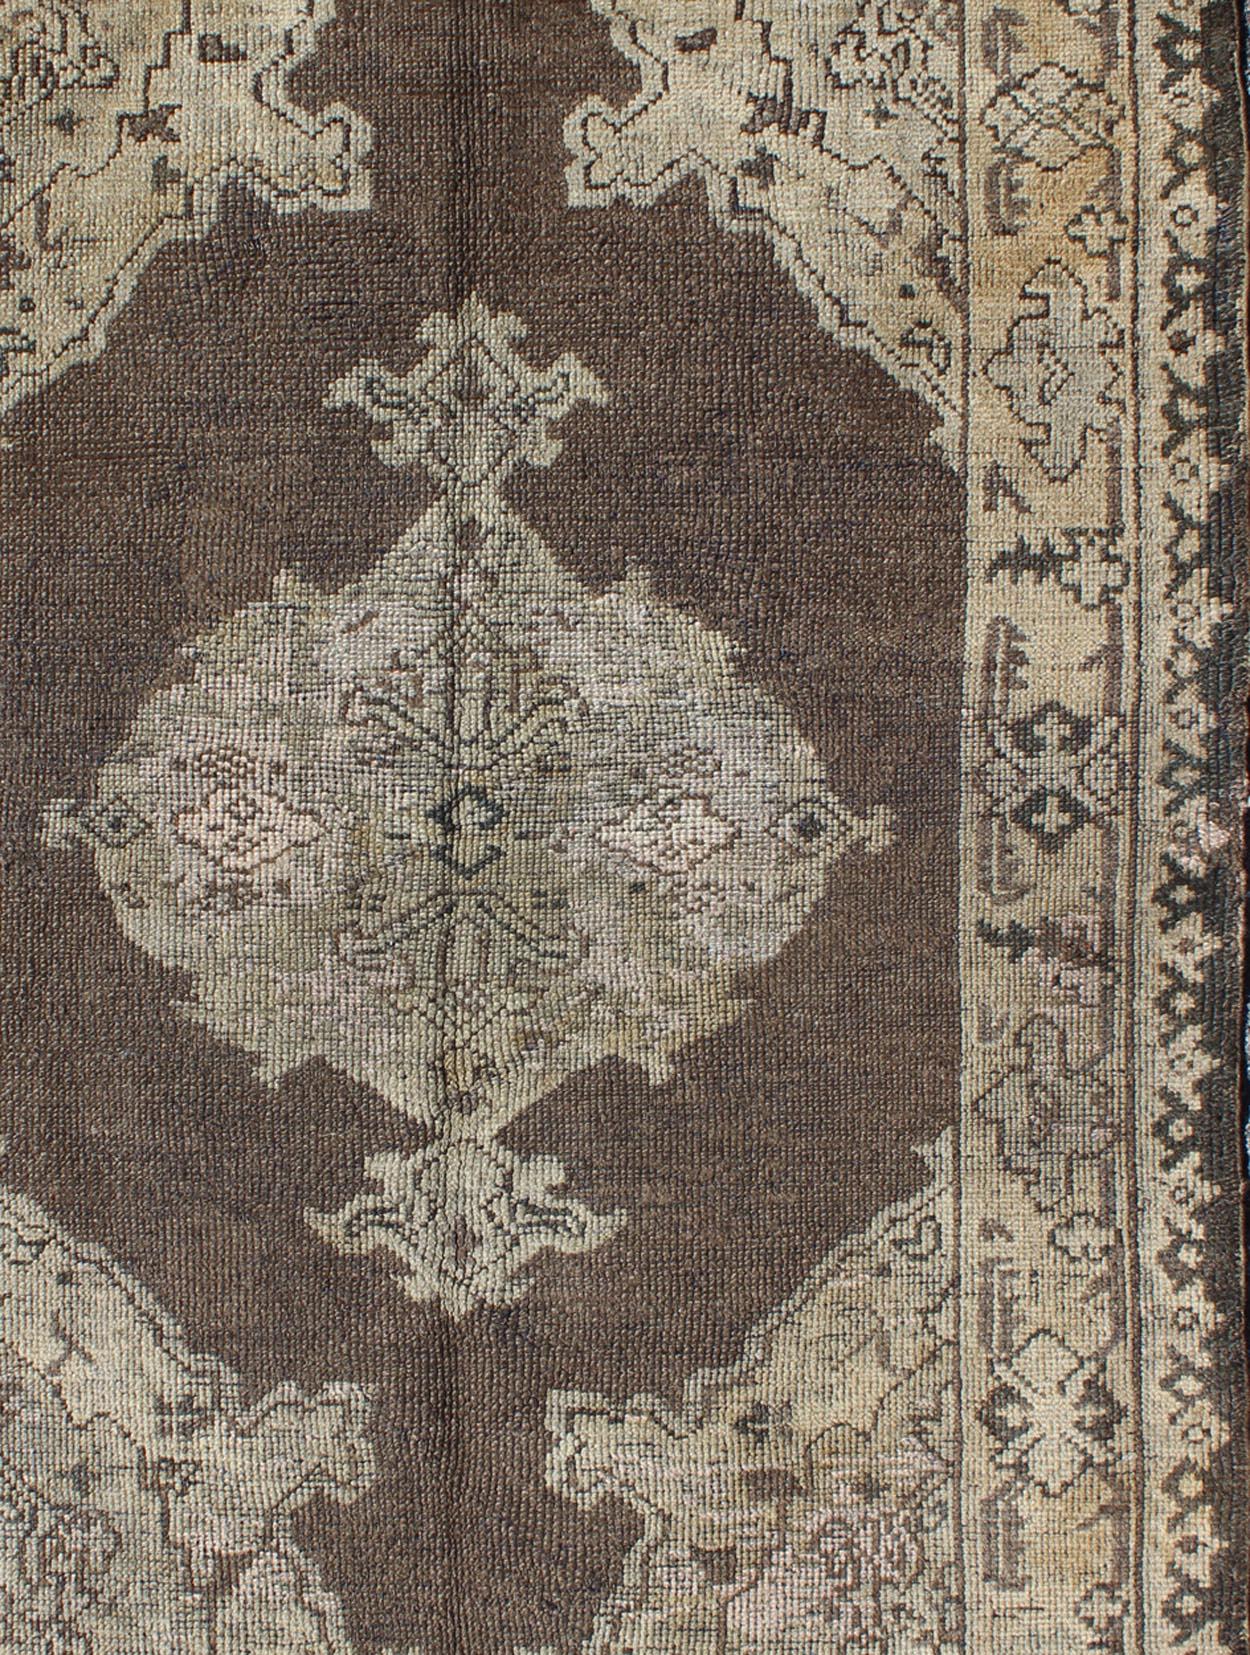 Chocolate background vintage Turkish Oushak rug with floral medallion in cream, Keivan Woven Arts / rug/TU-MOZ-08, country of origin / type: Turkey / Oushak, circa mid-20th century.

This vintage Turkish Oushak carpet (circa mid-20th century)